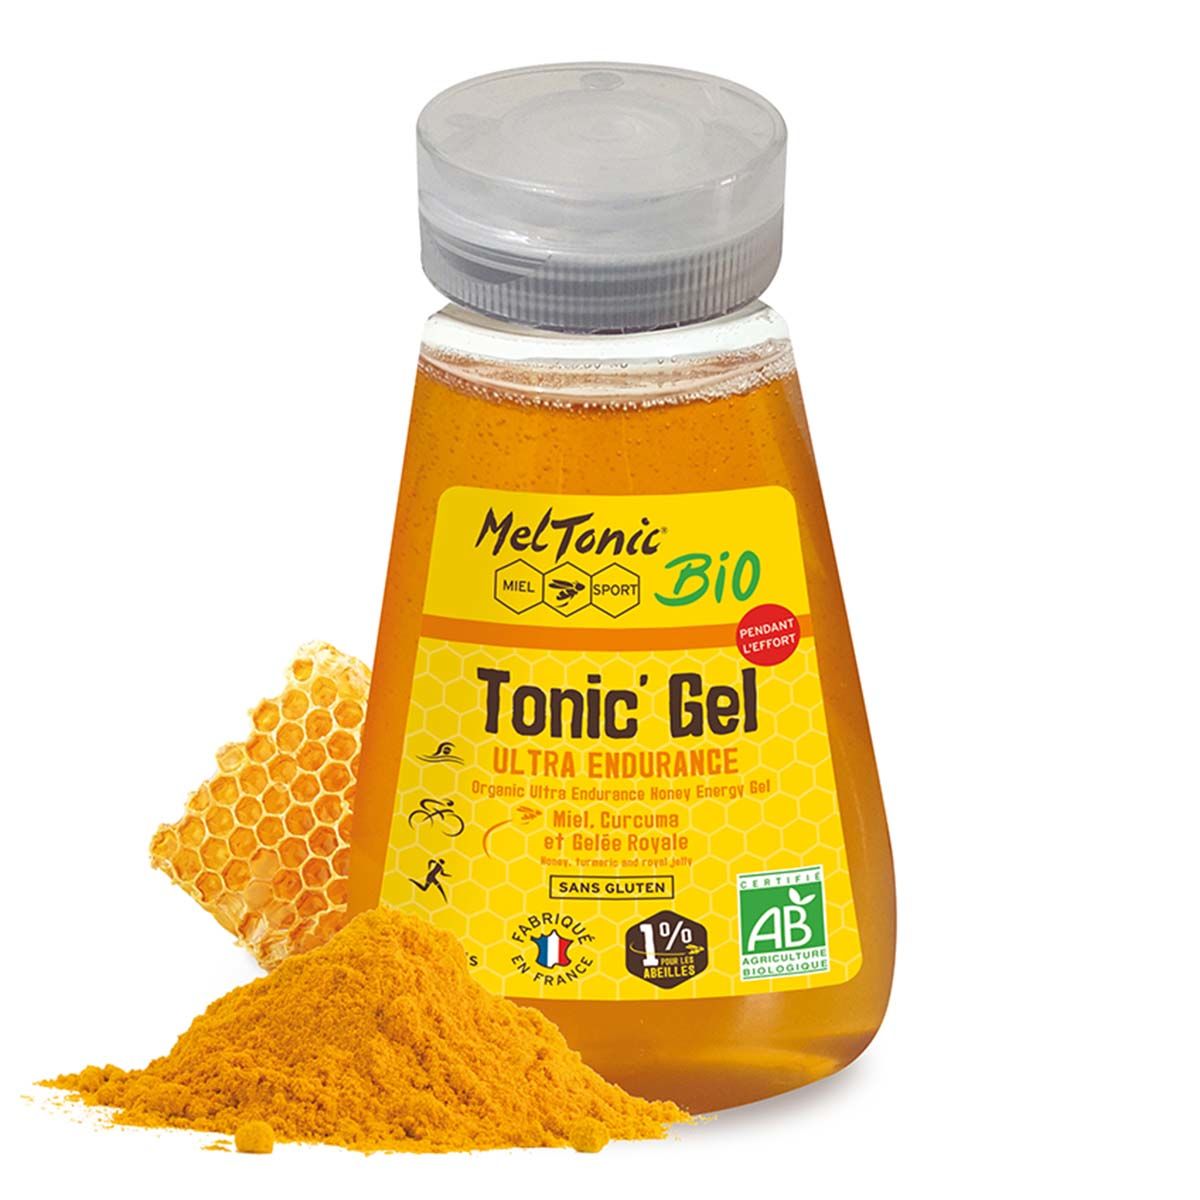 Eco-refill 12 organic gels - Meltonic Ultra Endurance - Honey and turmeric